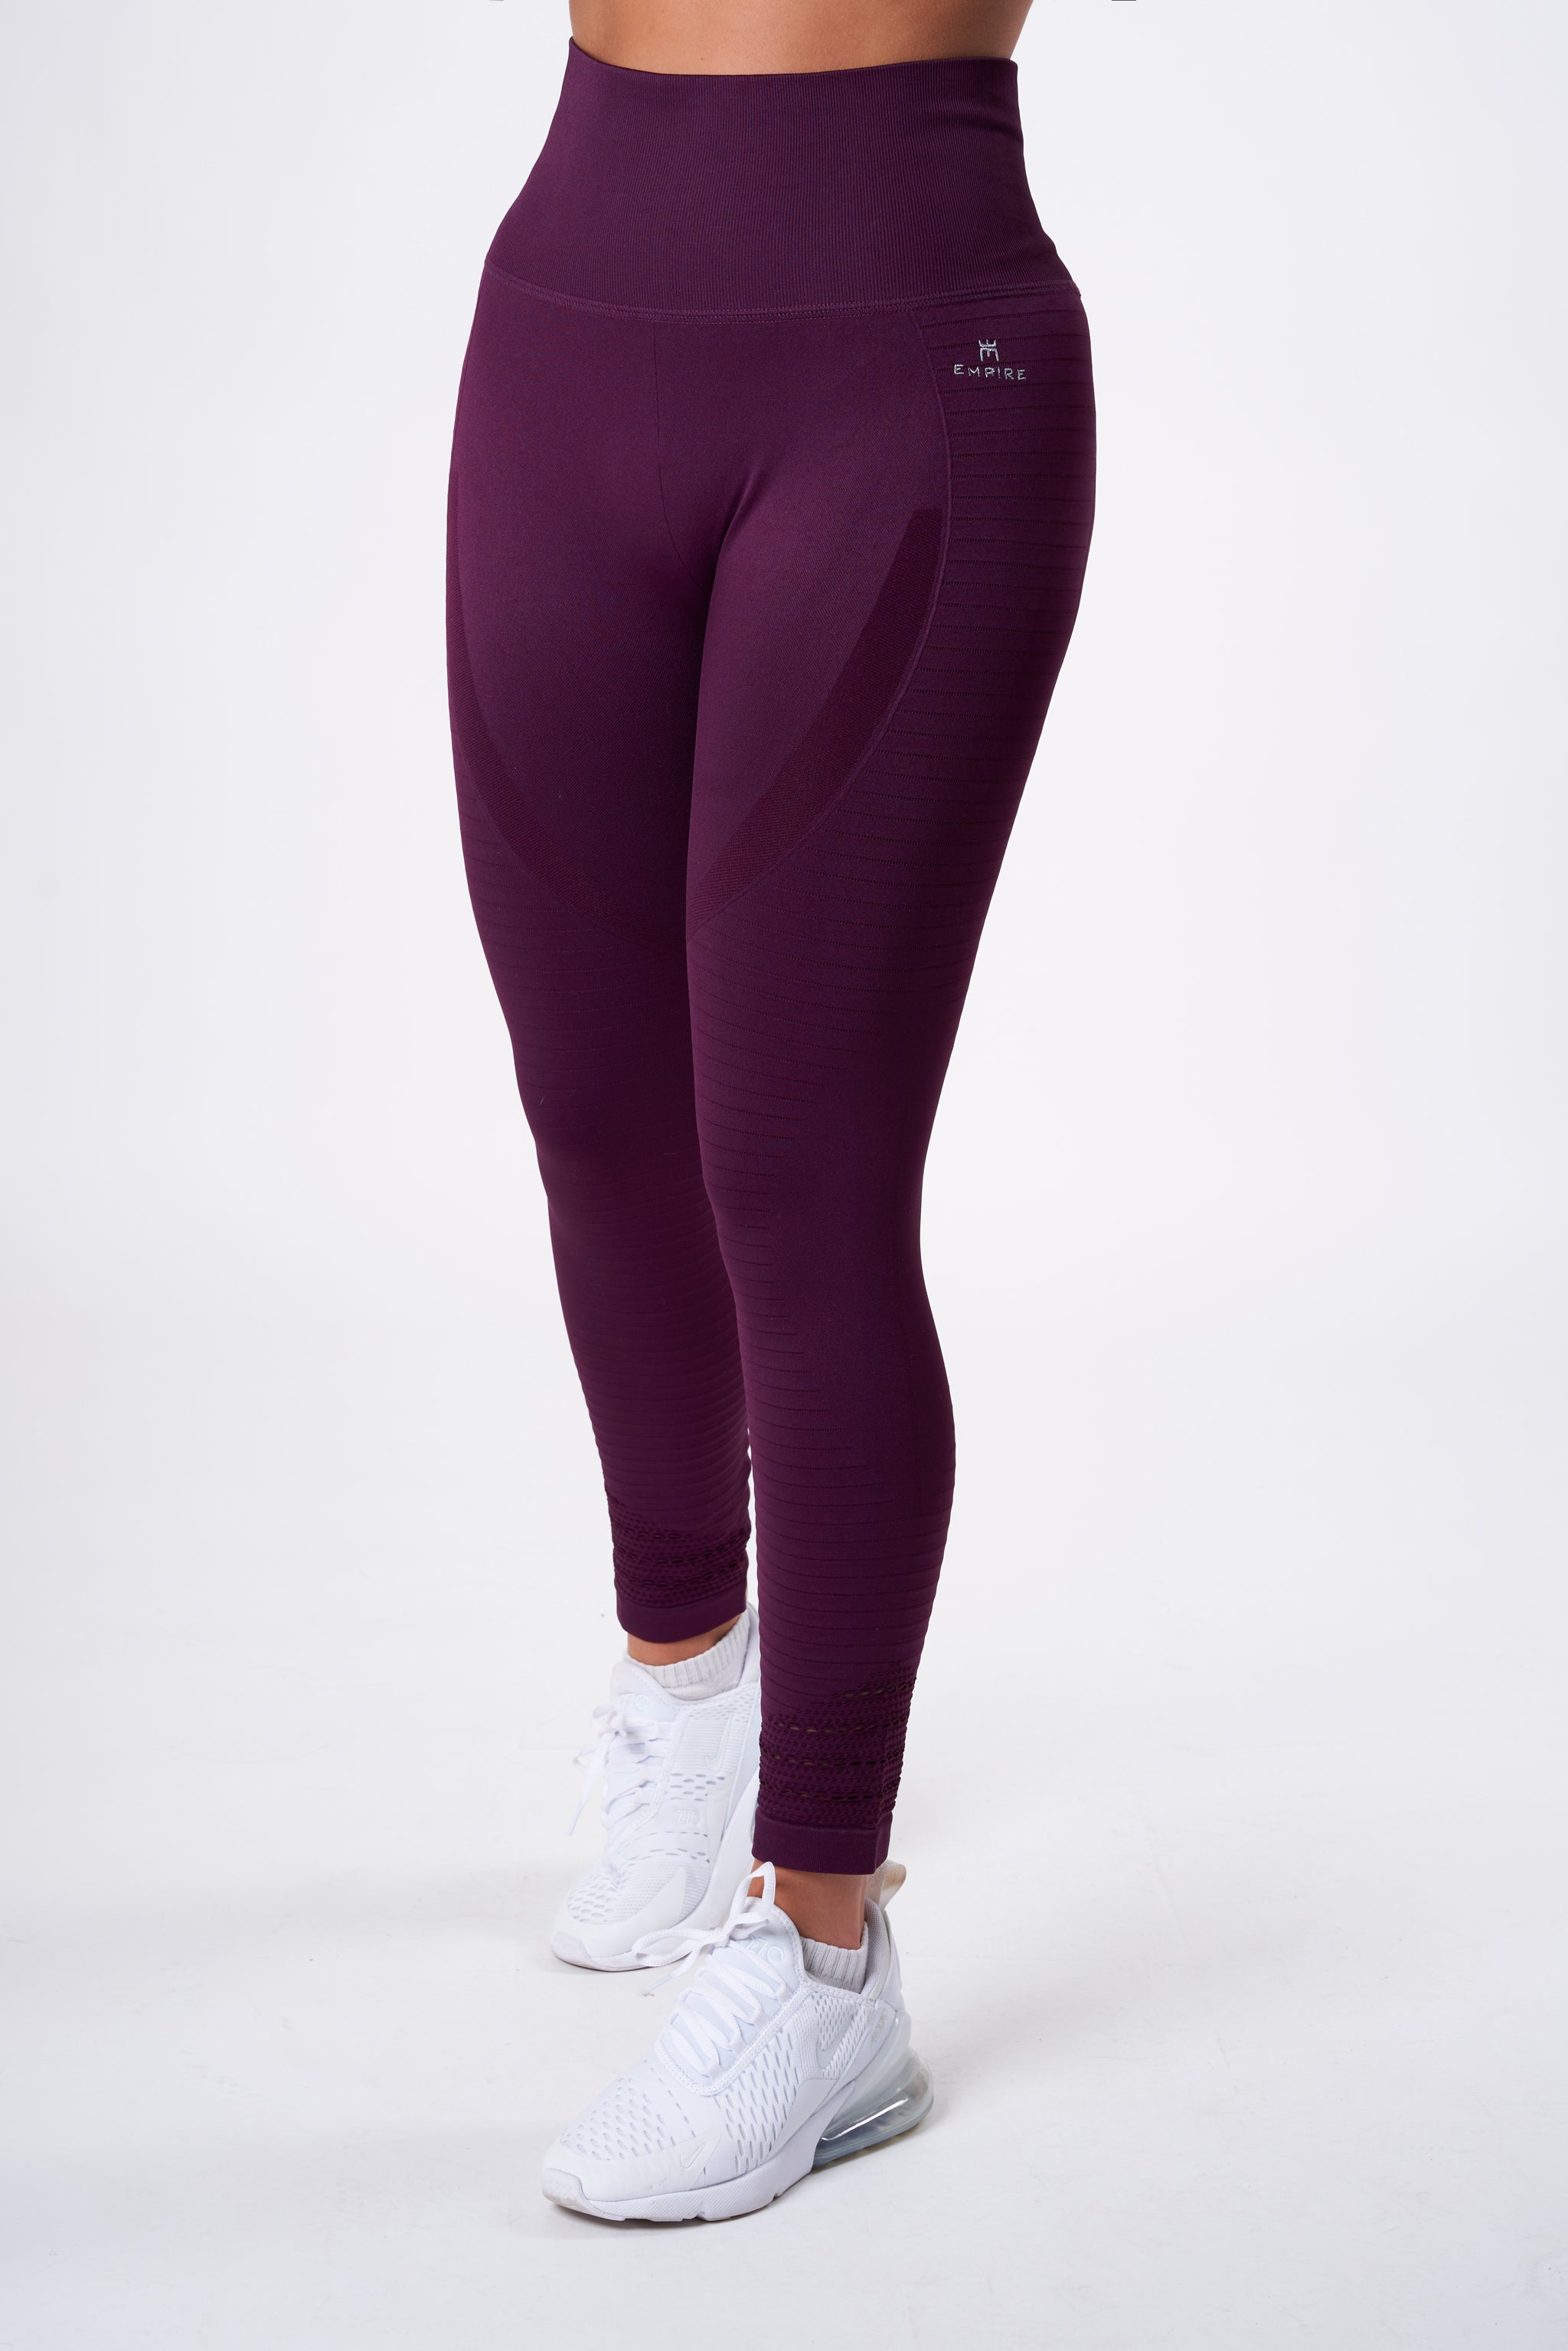 Elastic leggings with pocket in dark purple, 12.99€ | Celestino